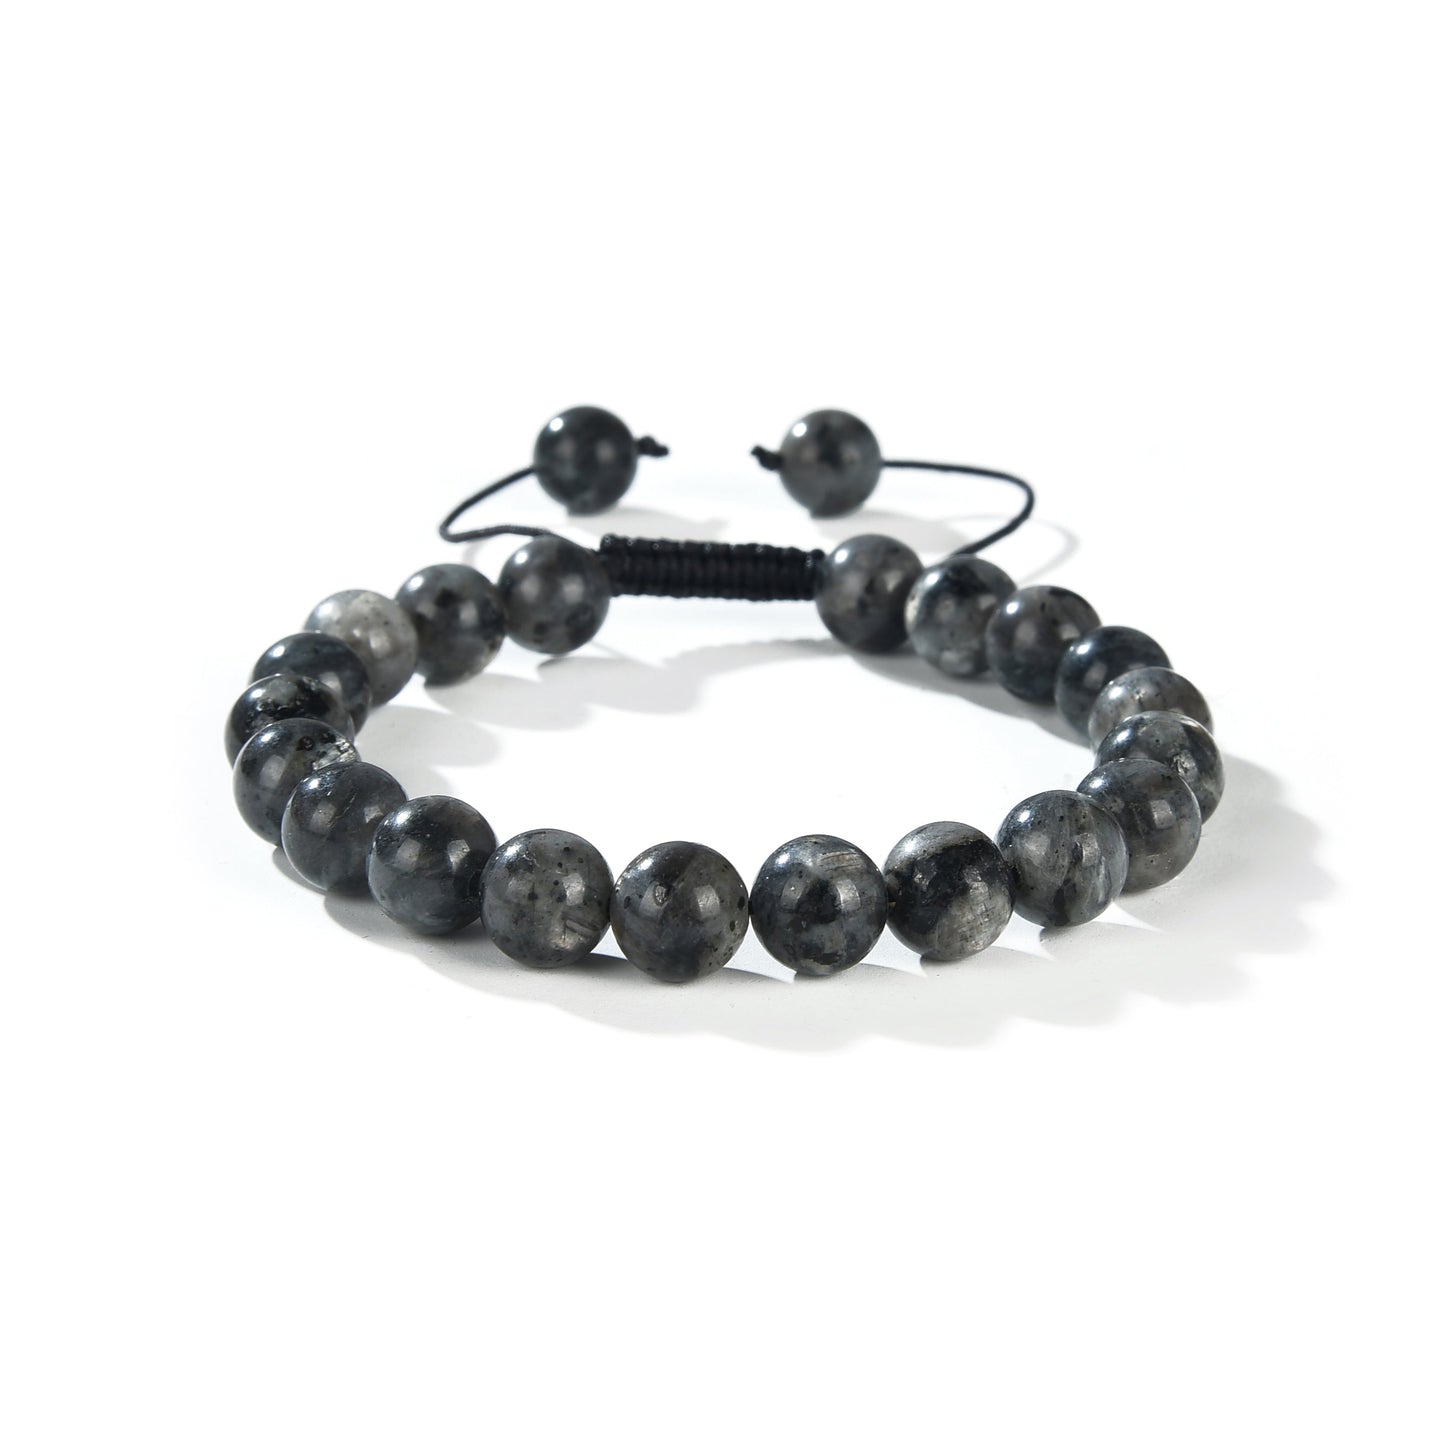 Black Labradorite Round Beads Slide Bracelet 8mm